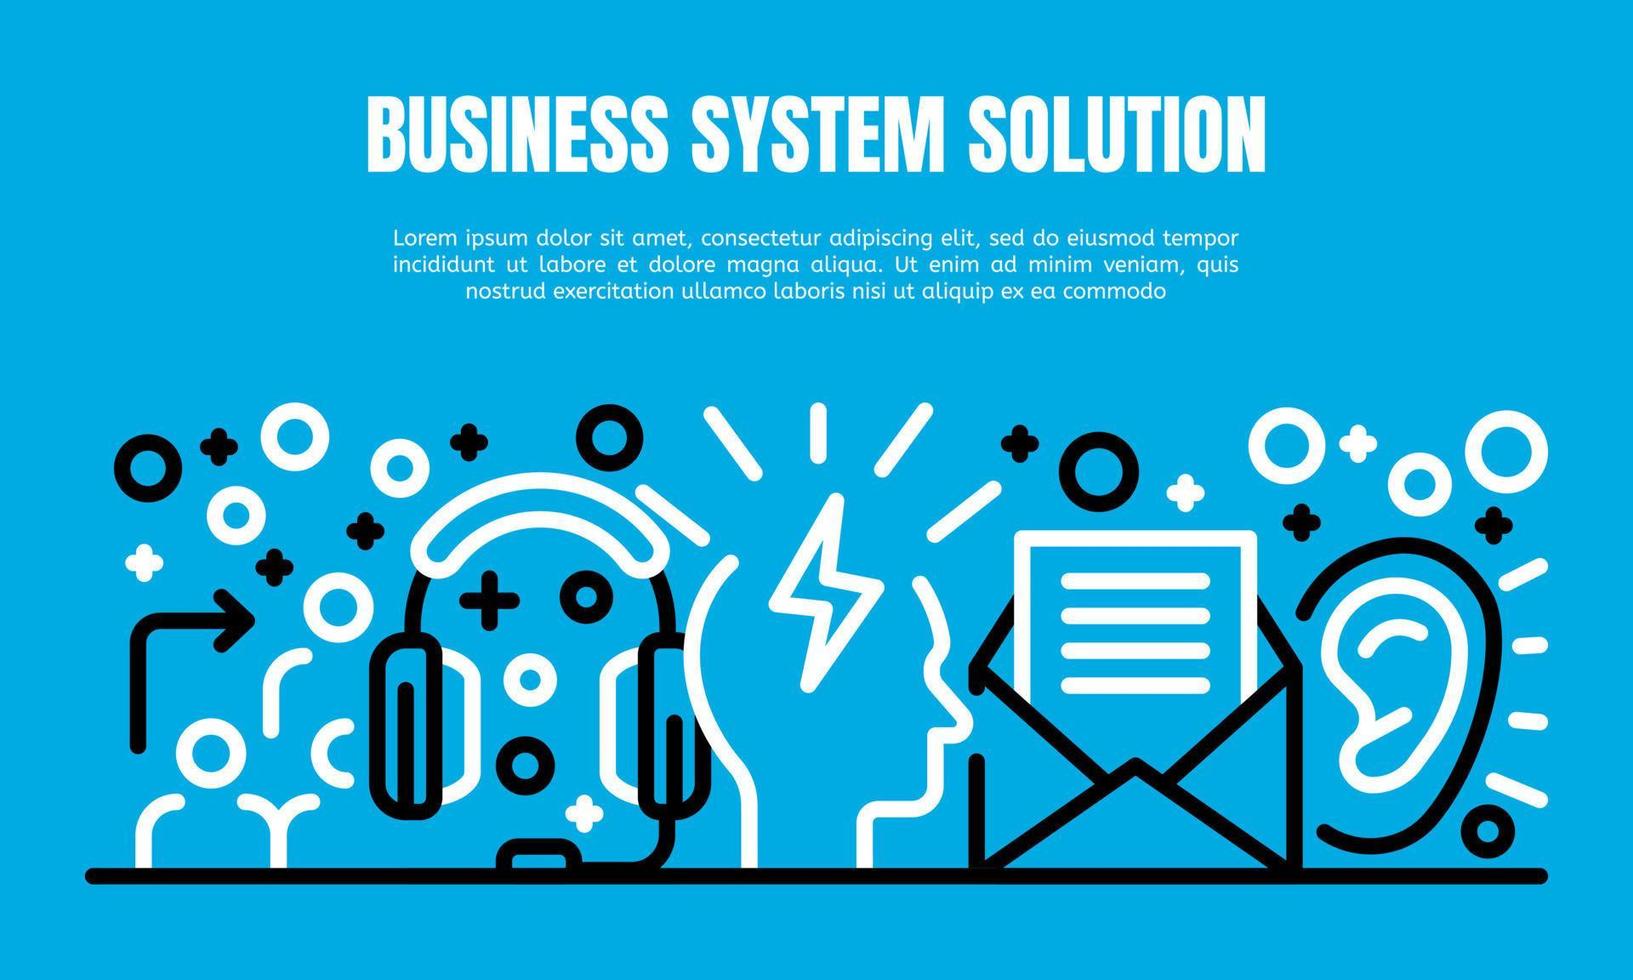 banner de solución de sistema empresarial, estilo de esquema vector